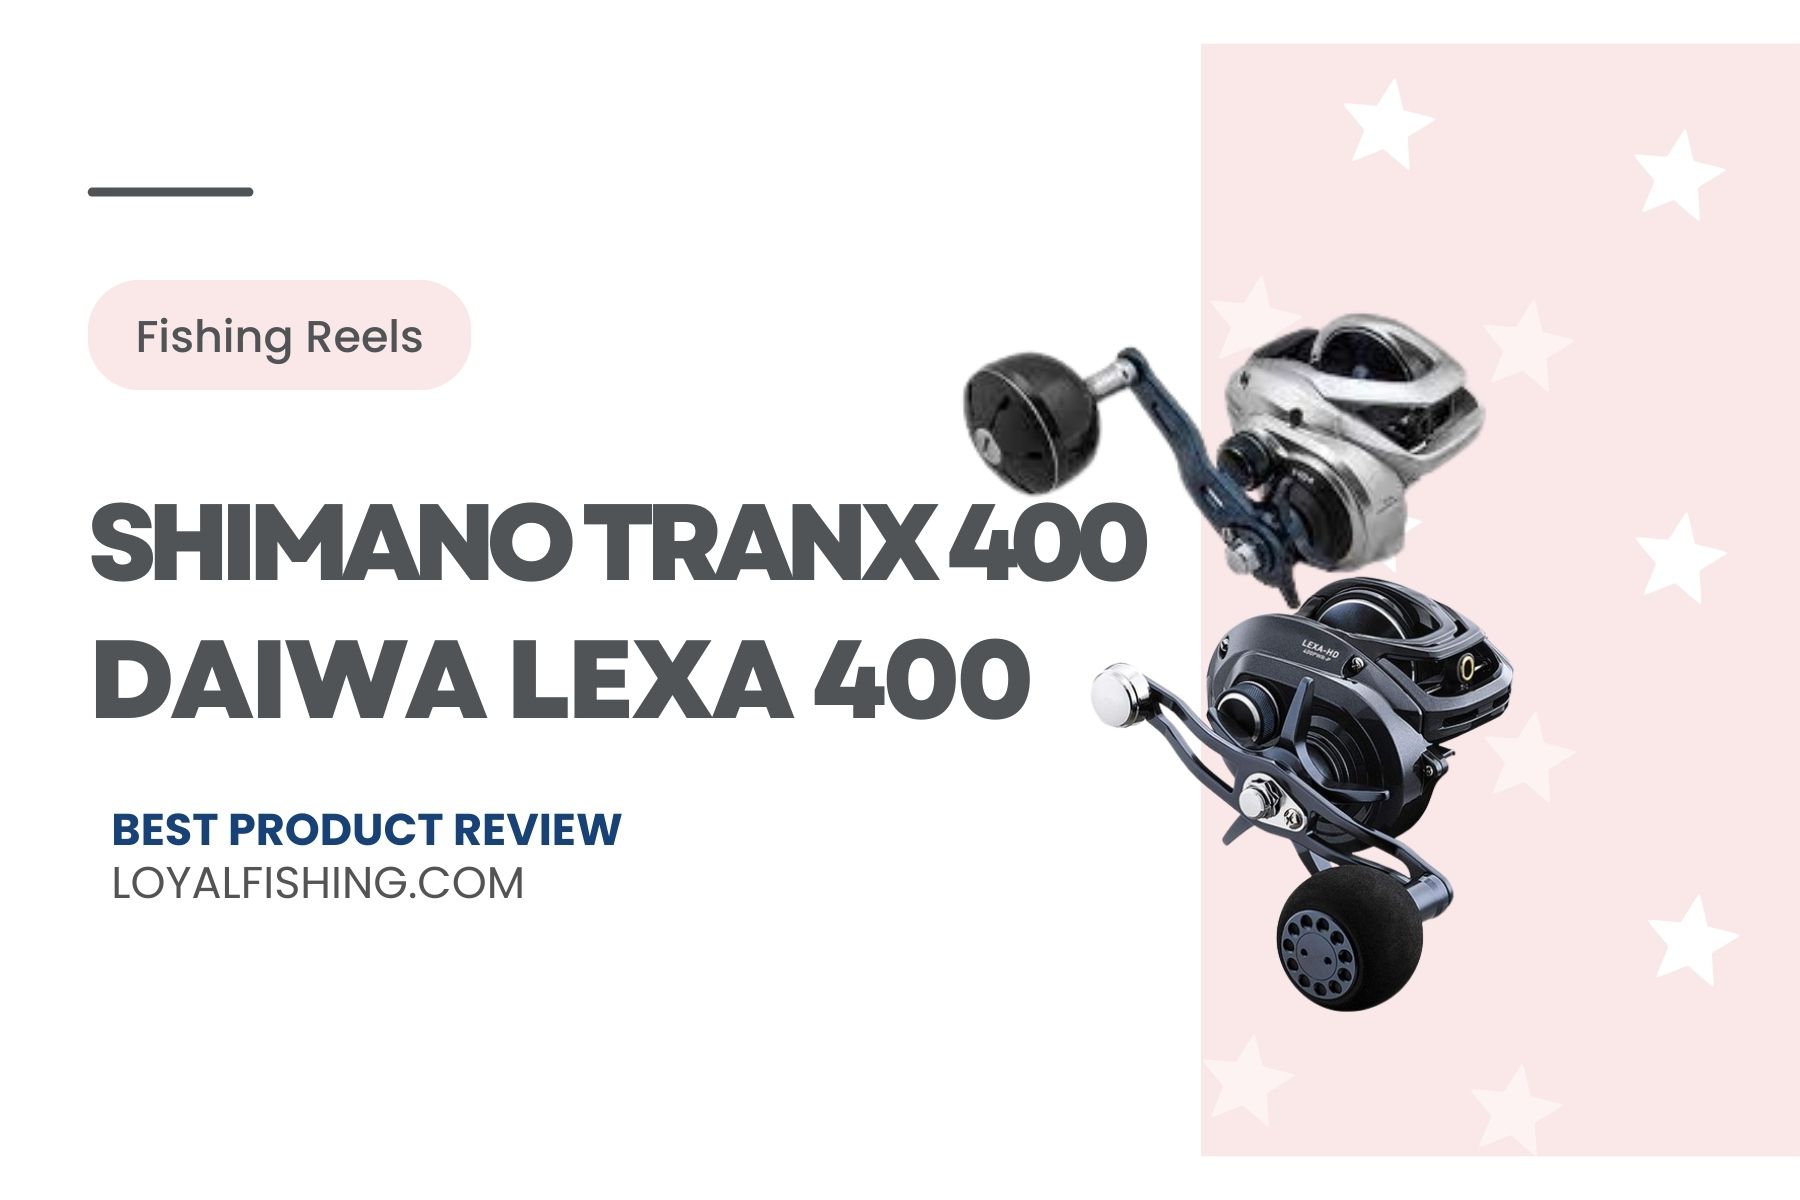 Shimano Tranx 400 vs Daiwa Lexa 400